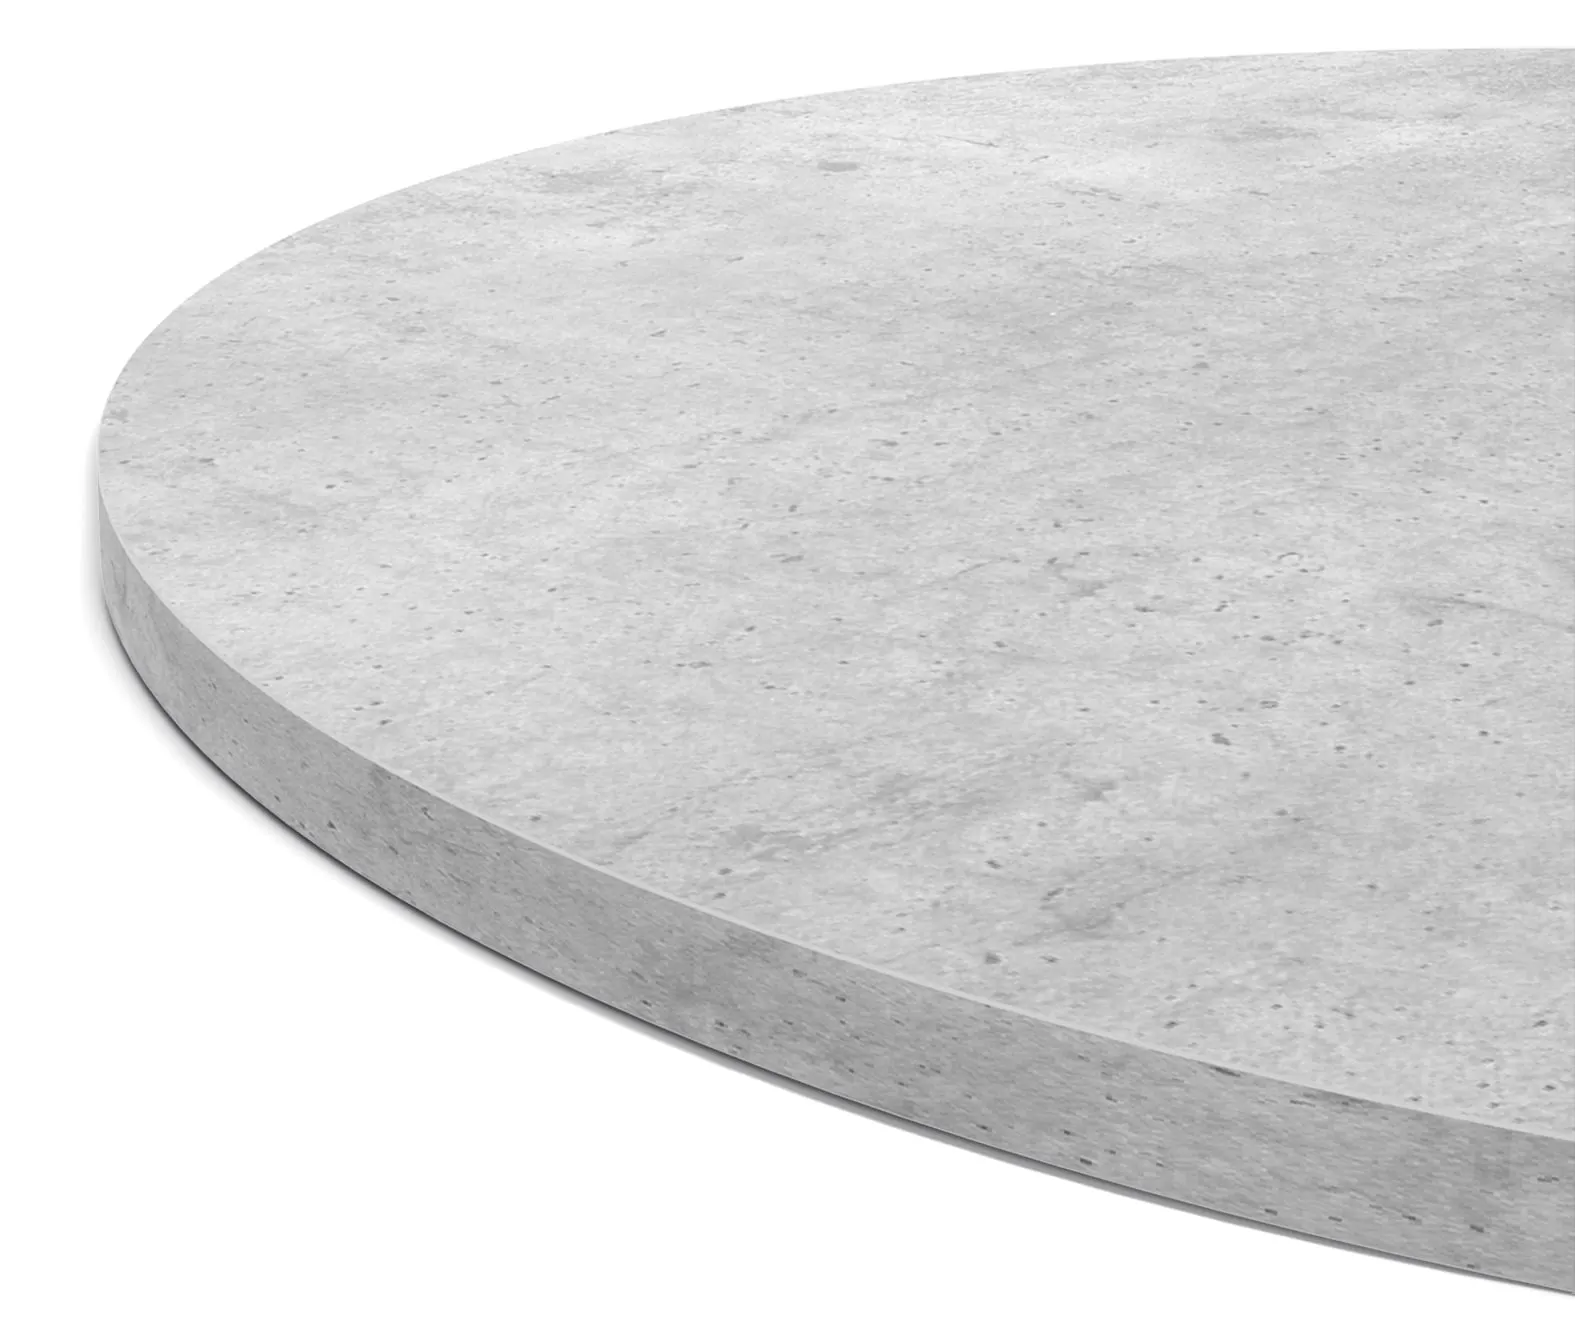 Изображение Стол кухонный круглый Sheffilton 90 см белый муар / бетон чикаго светло-серый